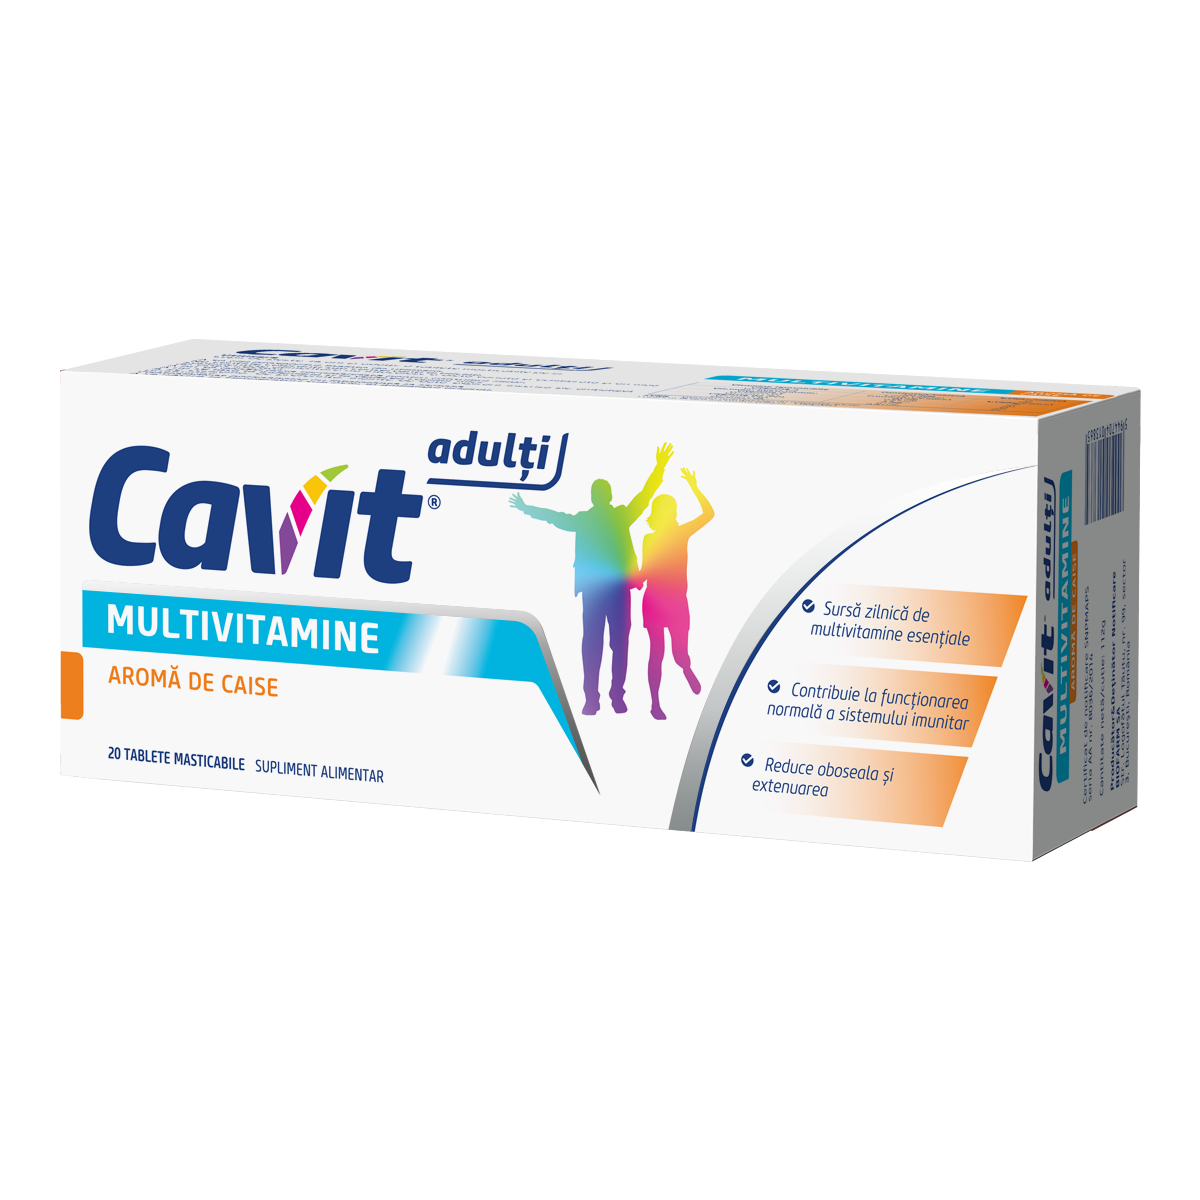 Uz general - Cavit adulti multivitamine aroma caise, 20 tablete, Biofarm, sinapis.ro